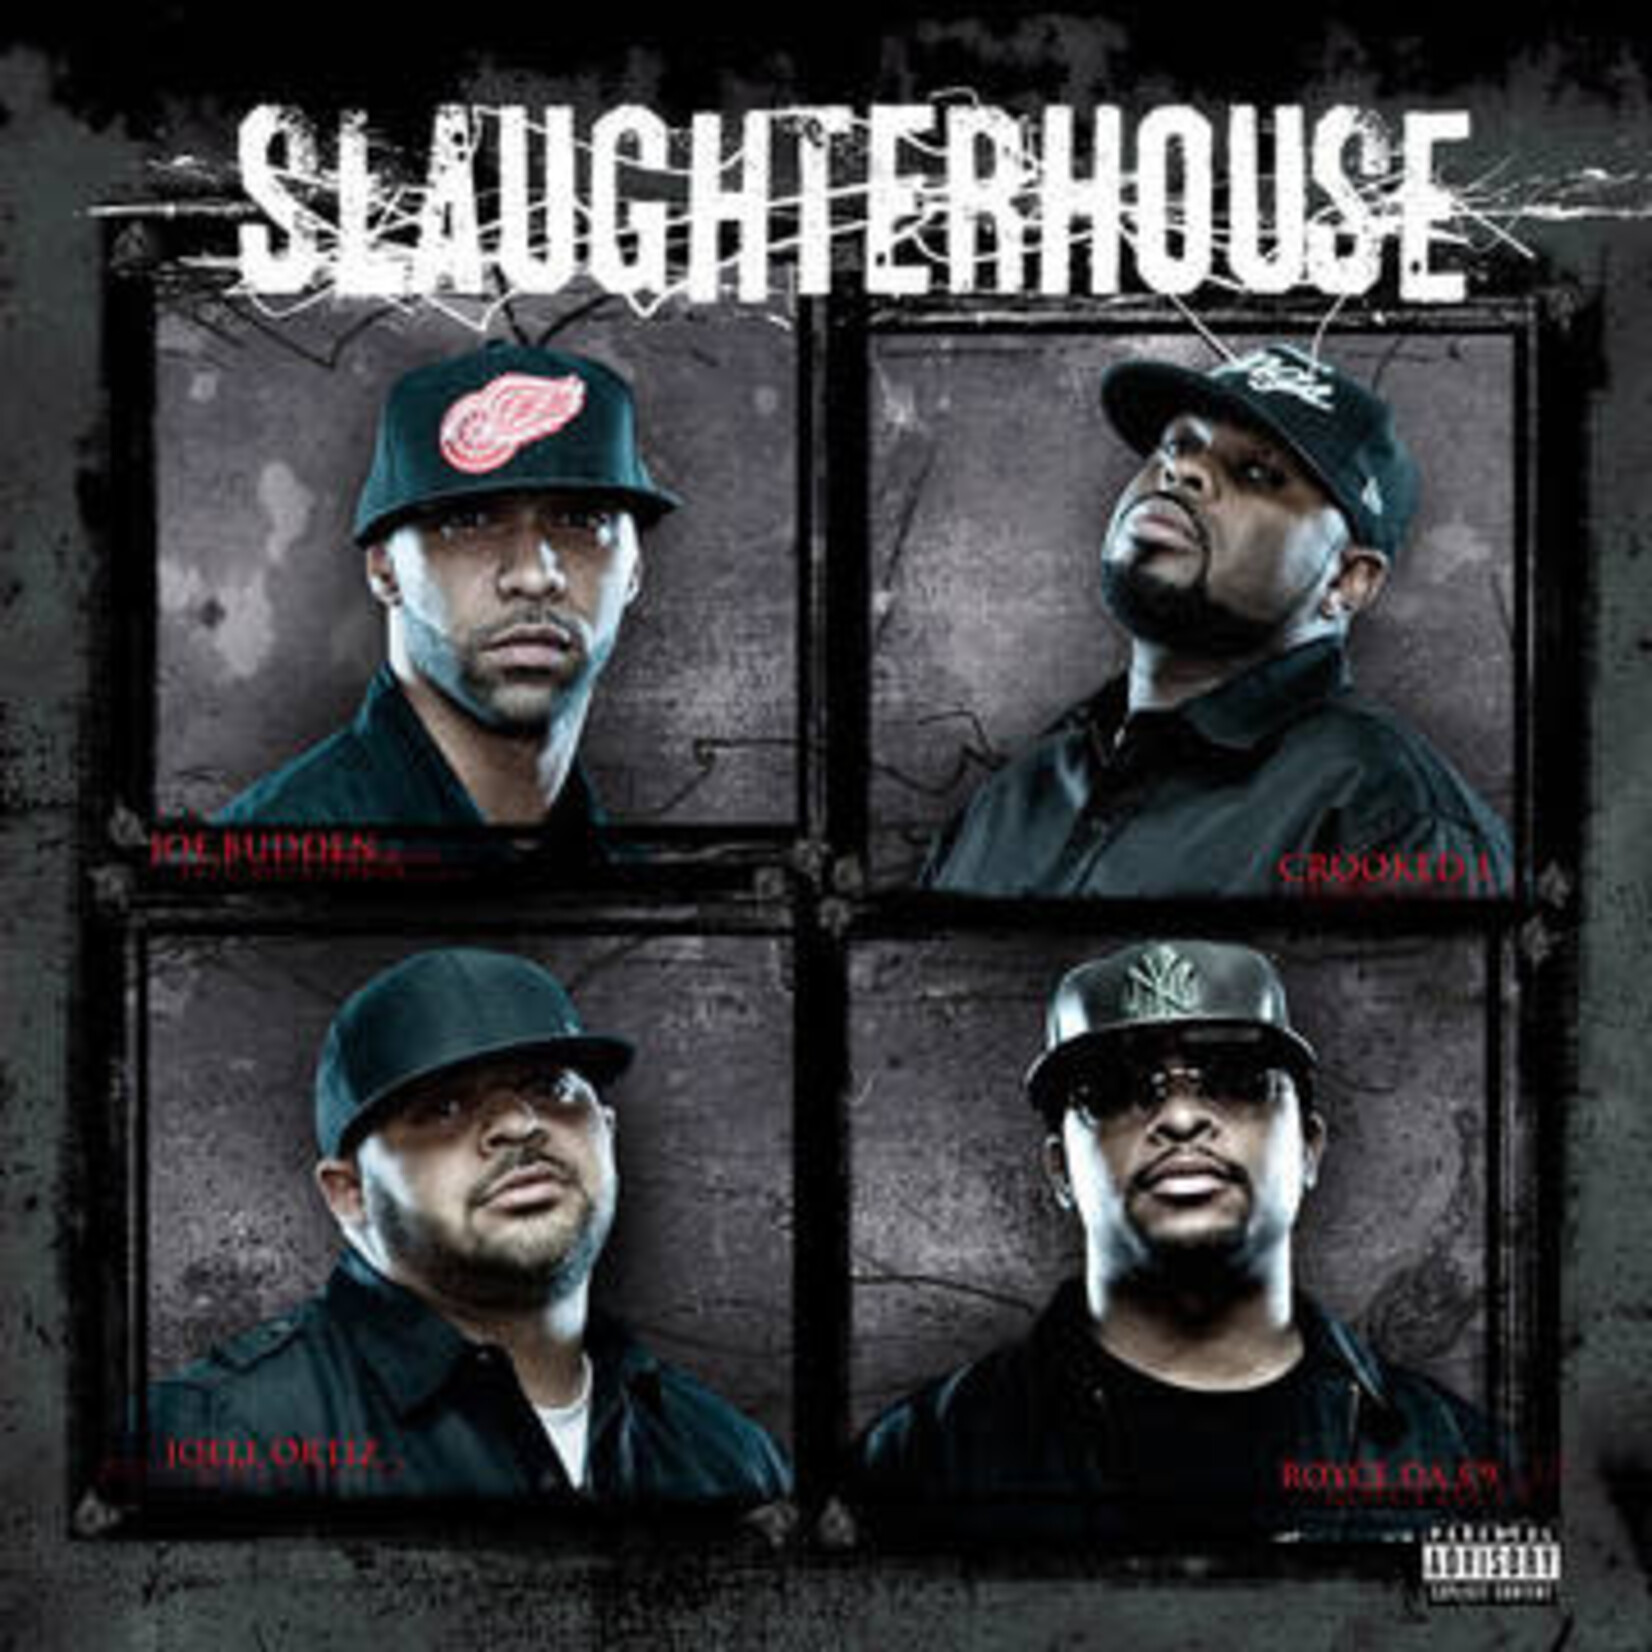 Slaughterhouse - Slaughterhouse [2LP] (RSDBF2022)